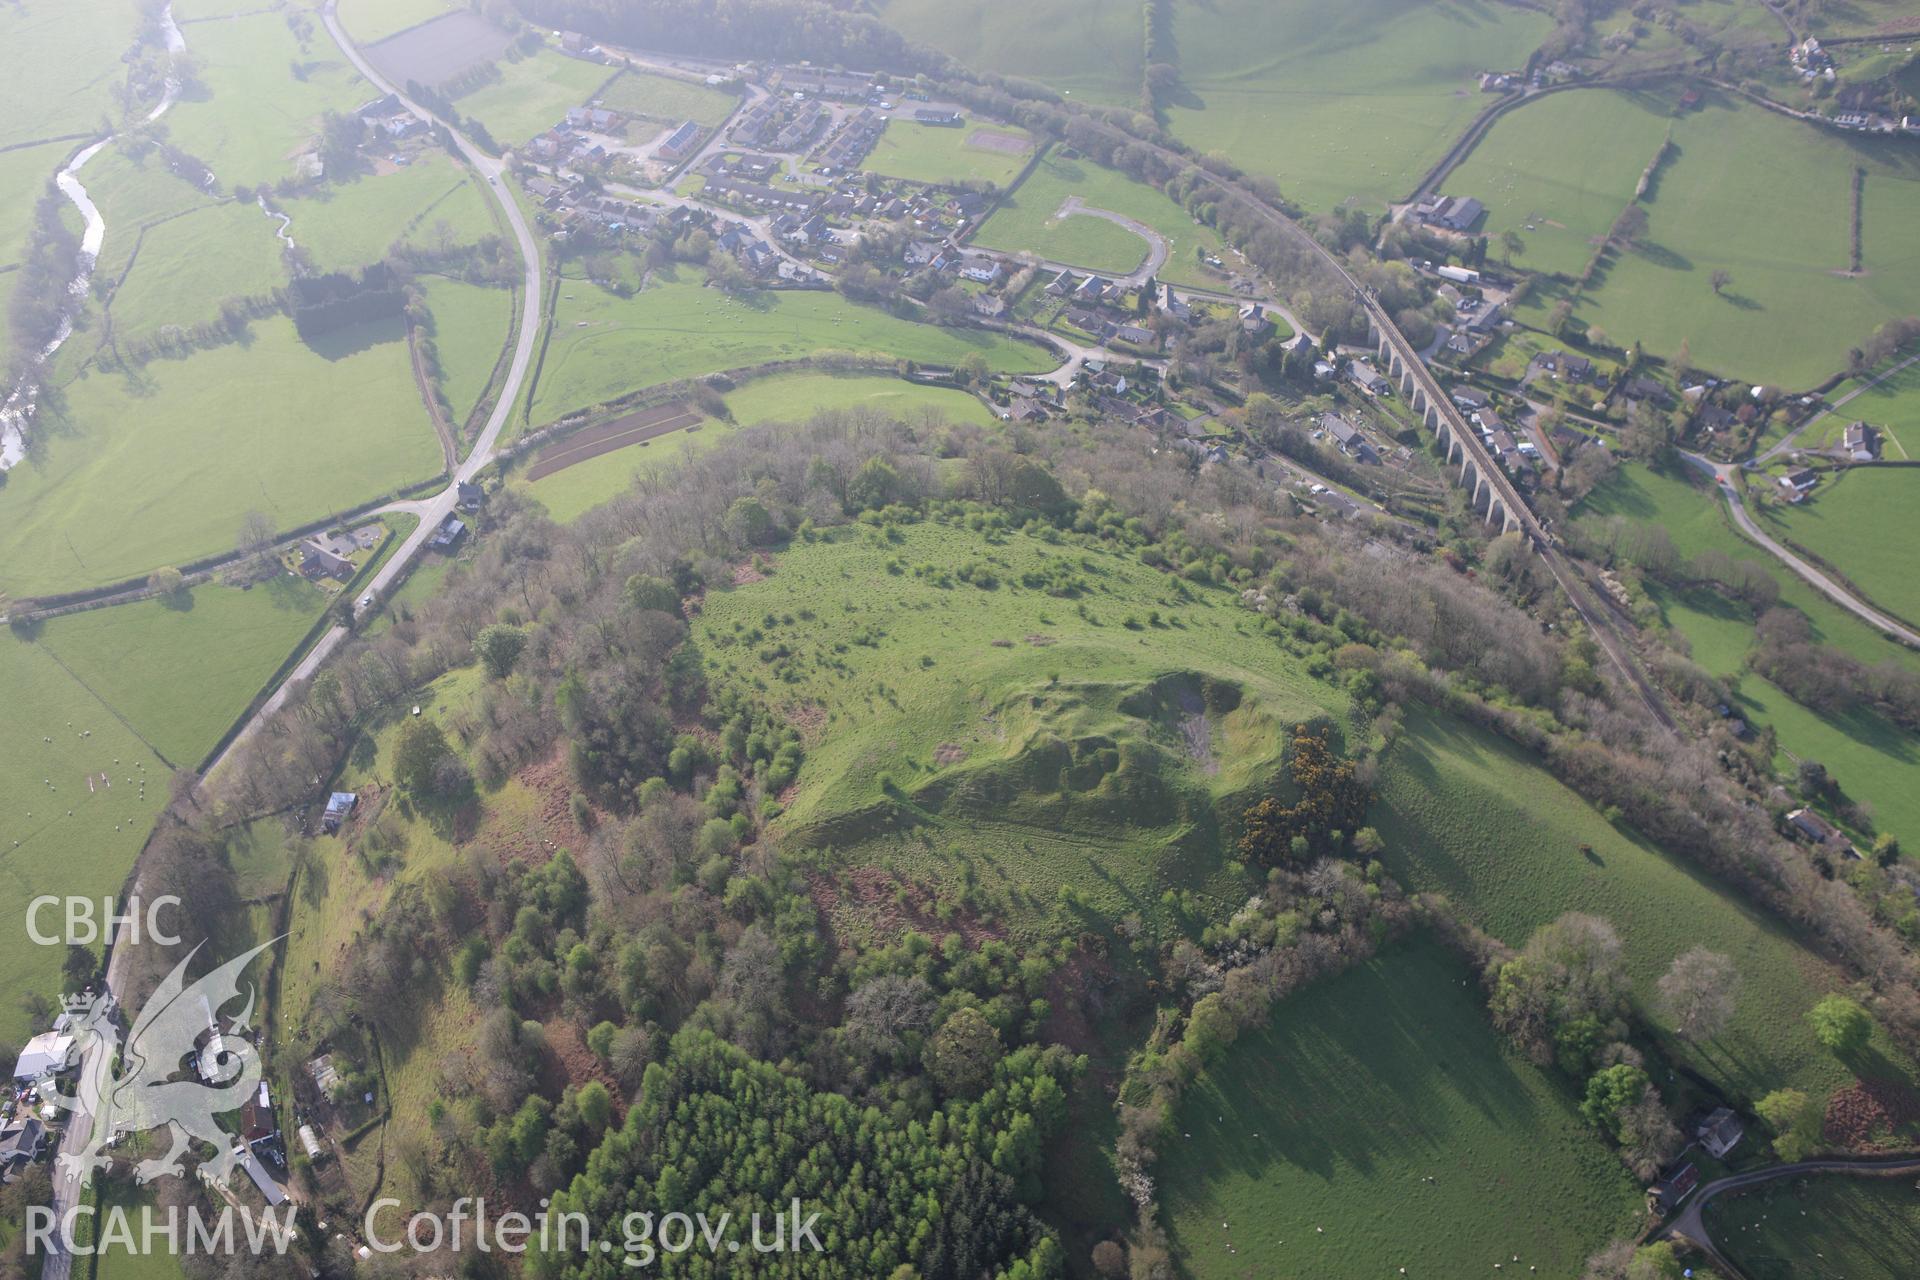 RCAHMW colour oblique aerial photograph of Cnwclas Castle. Taken on 21 April 2009 by Toby Driver